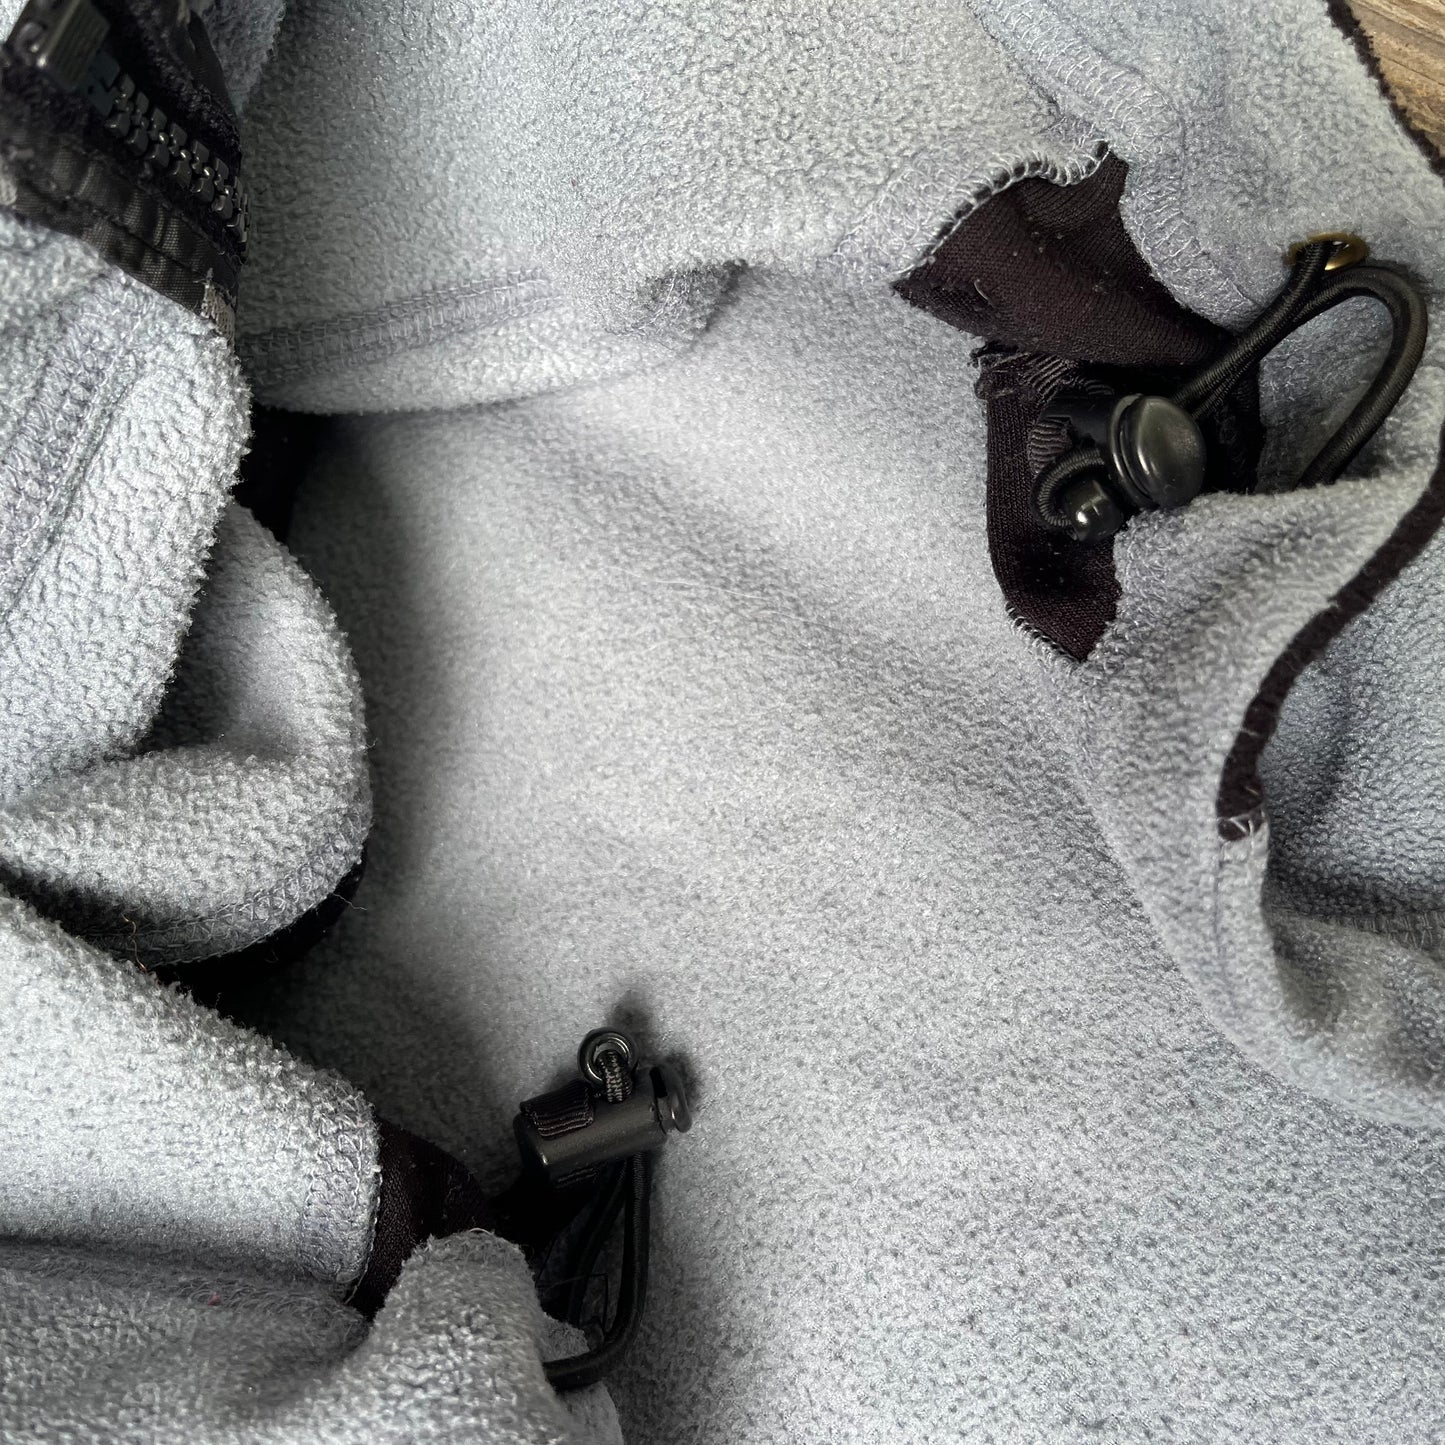 Fleecejacke Fjällräven (L Damen) Zipper- Sweatshirt grau